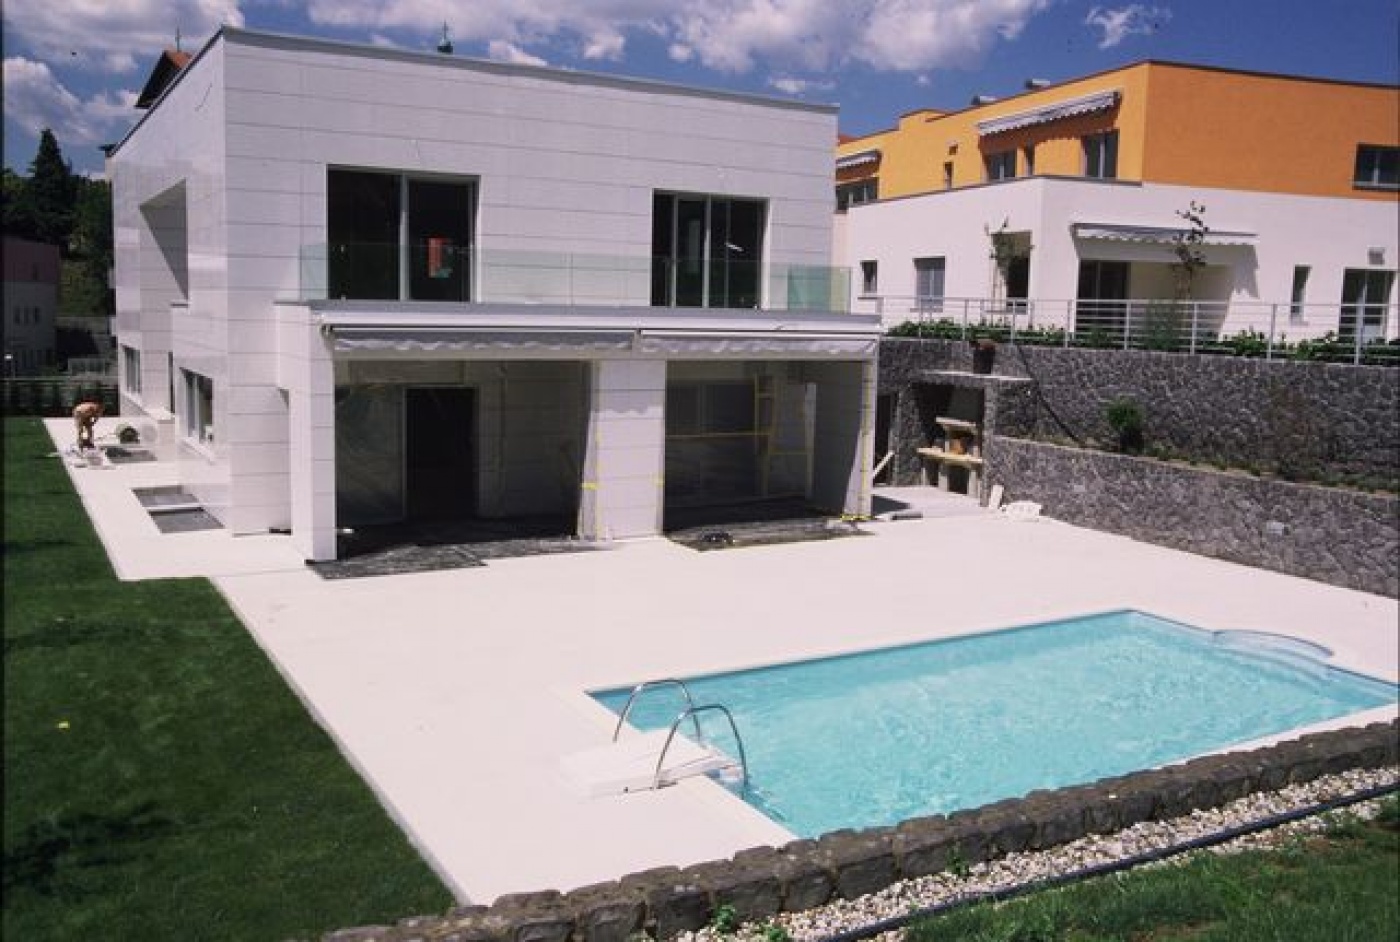 Granite Fabrication de revetement de façade sur mesure en composite quartz Blanco Paloma 